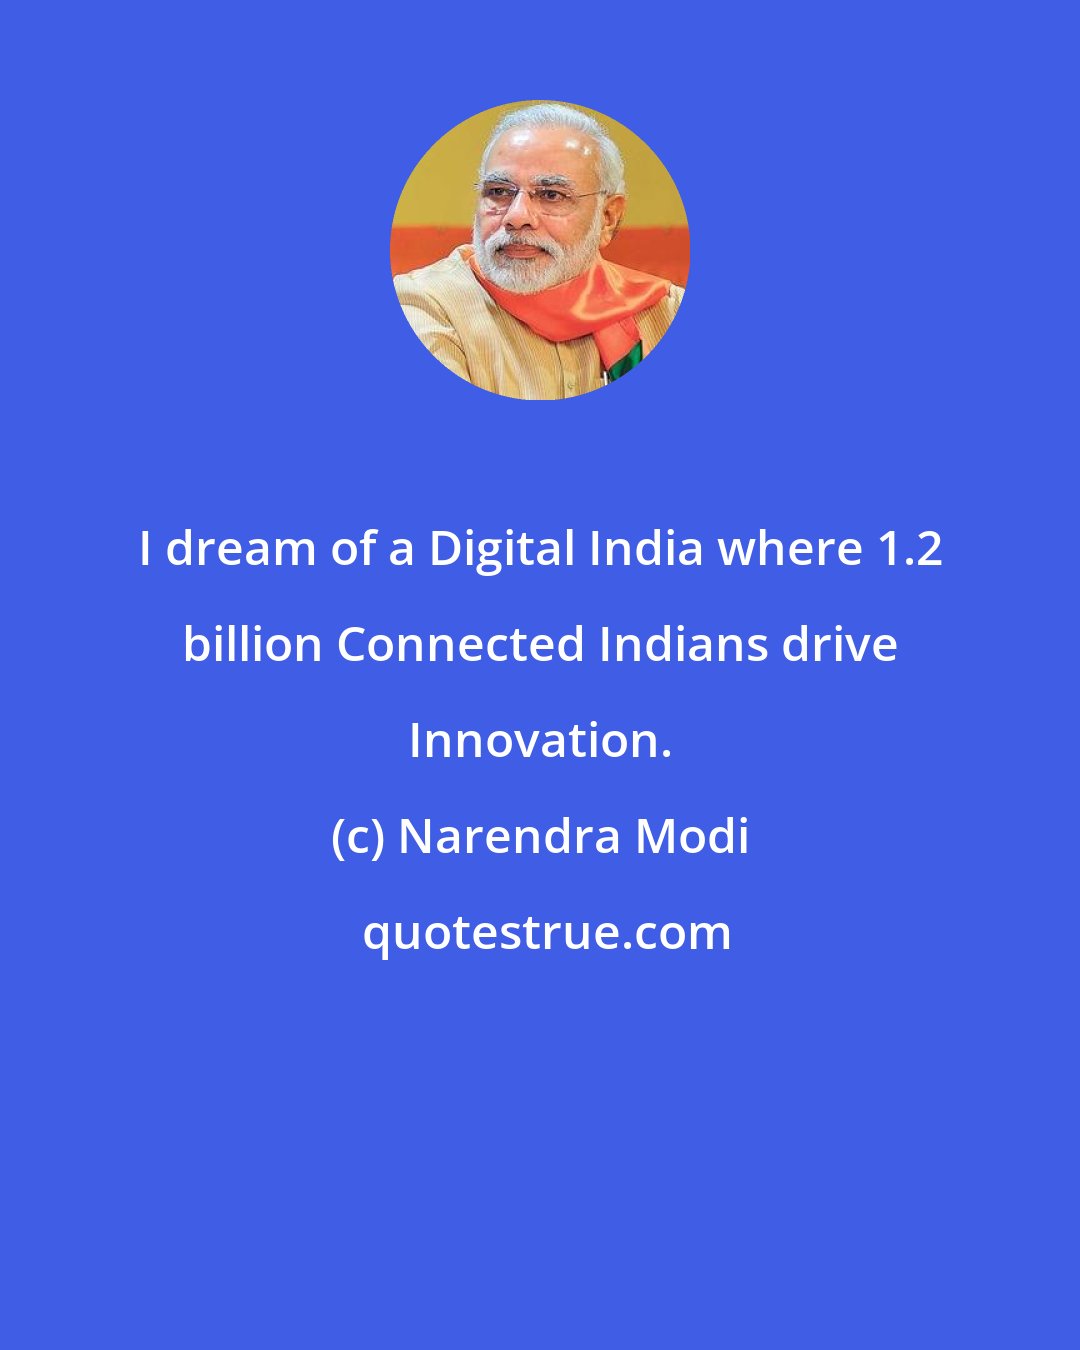 Narendra Modi: I dream of a Digital India where 1.2 billion Connected Indians drive Innovation.